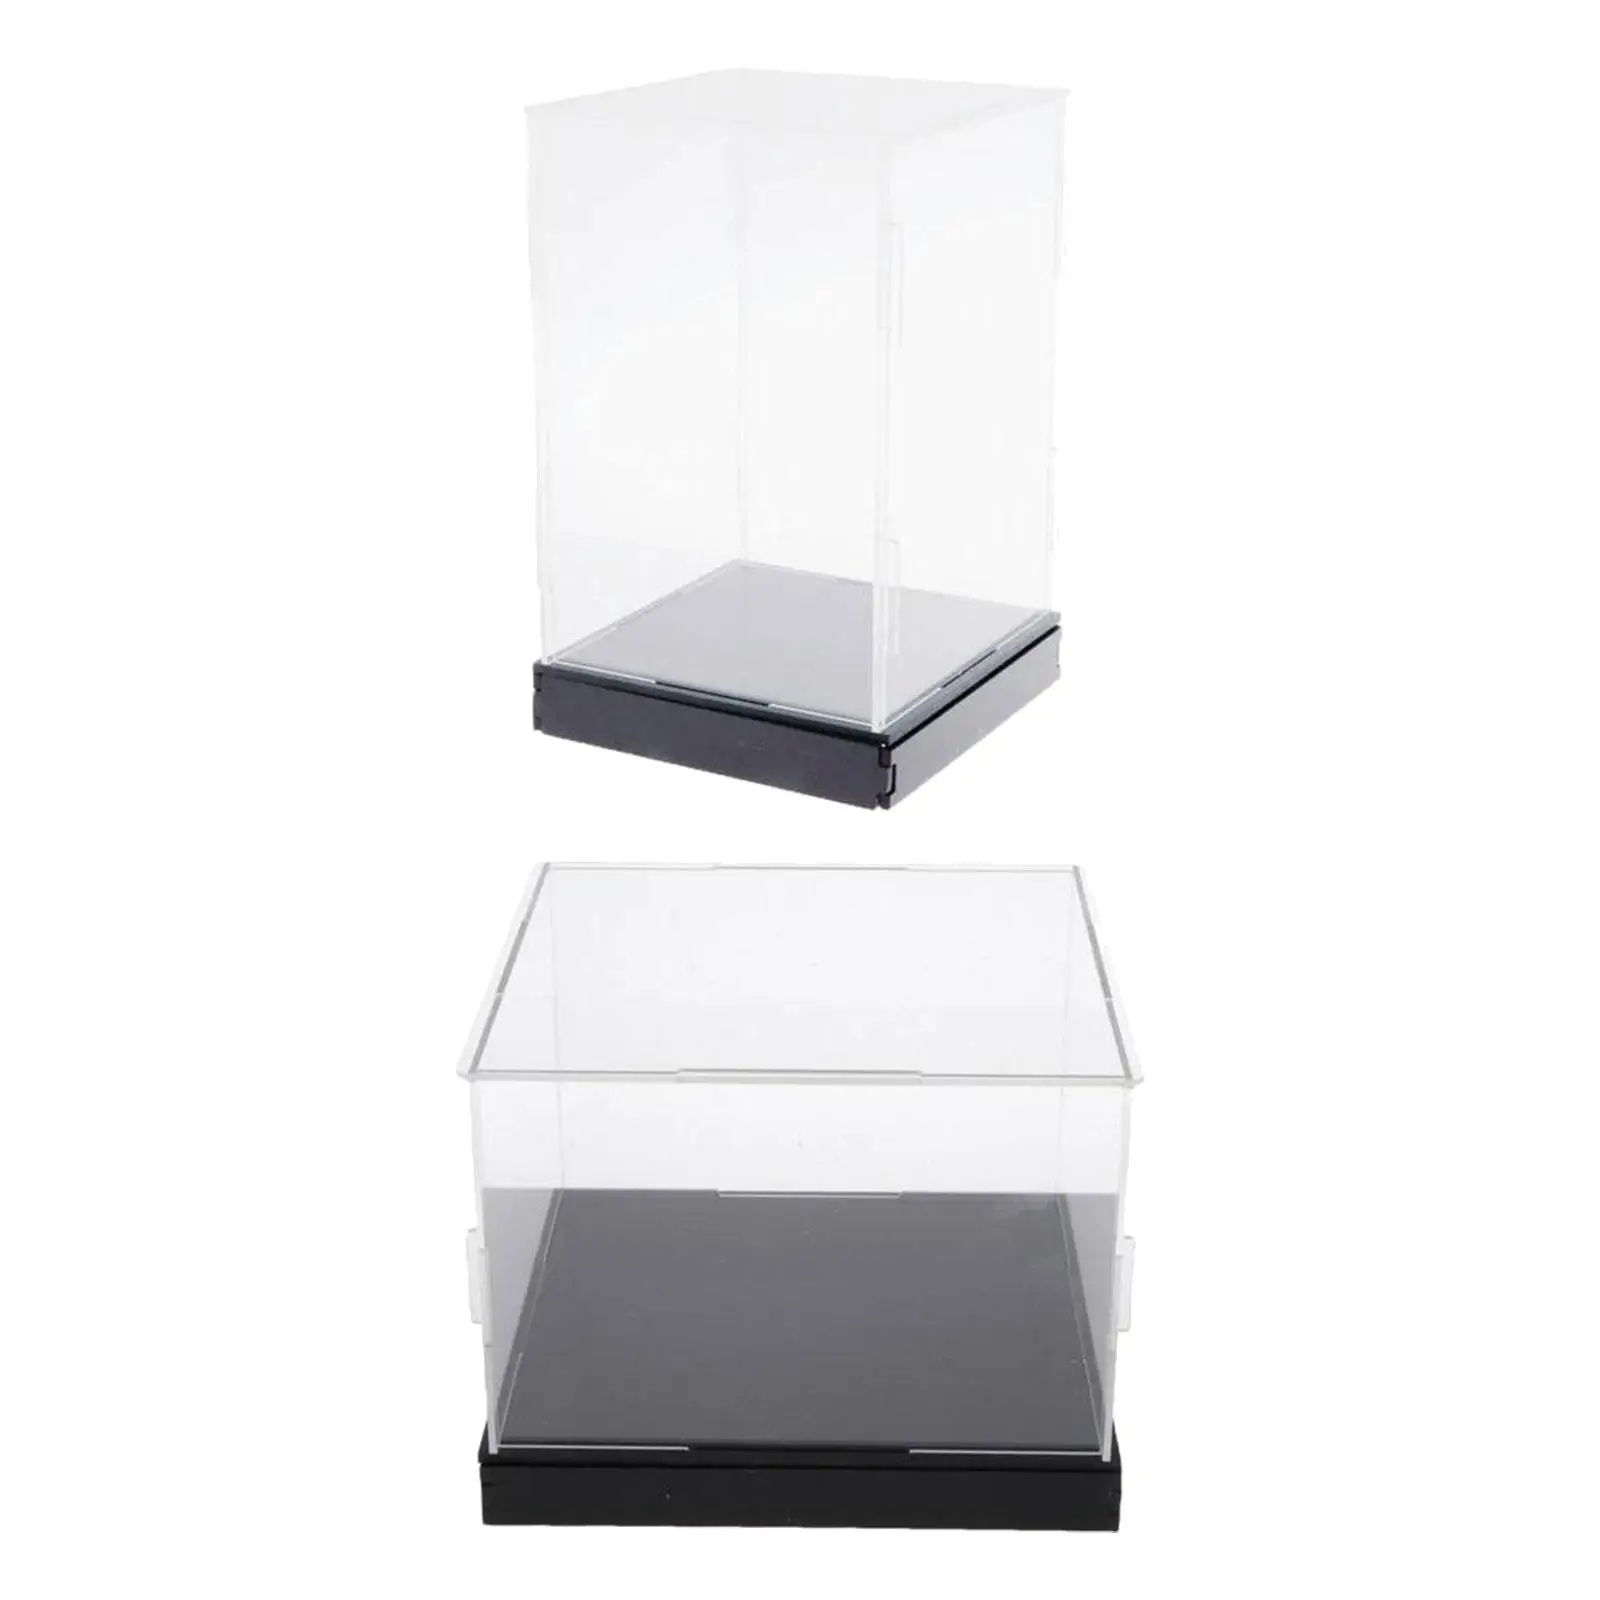 2pcs Clear Acrylic Display Box Dustproof Figure Toy Model Case